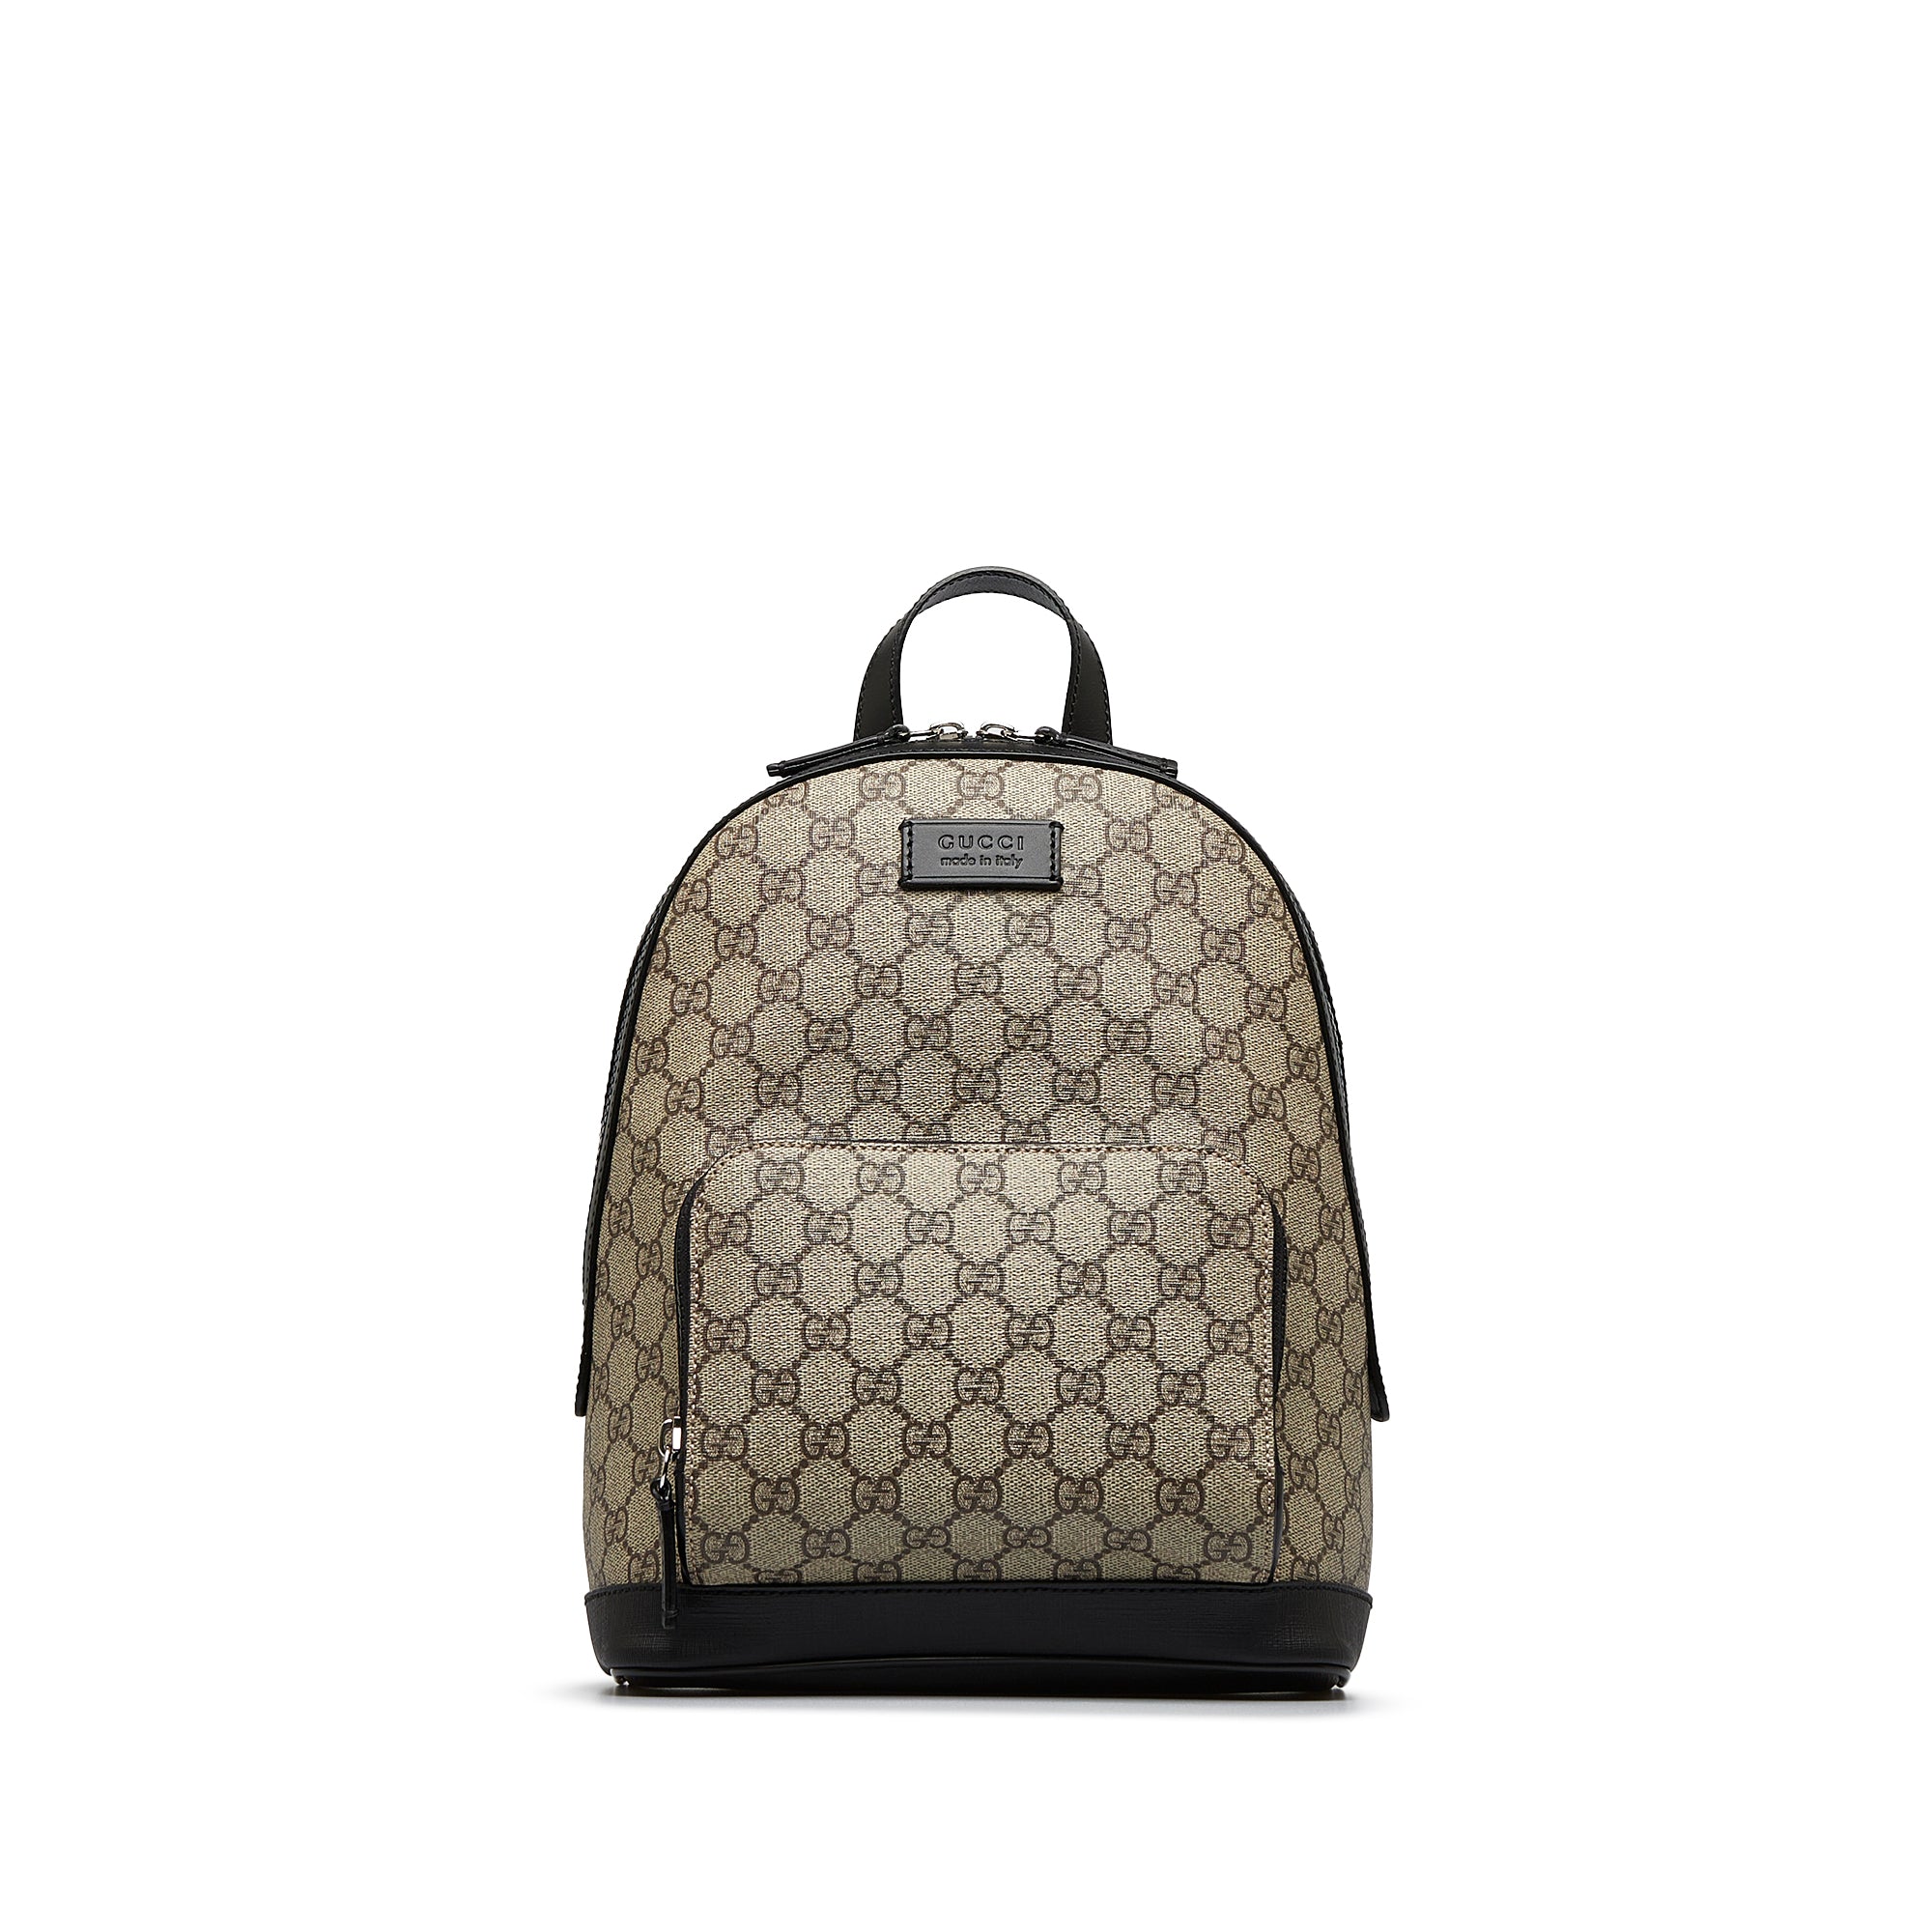 GG Supreme Backpack in Black - Gucci